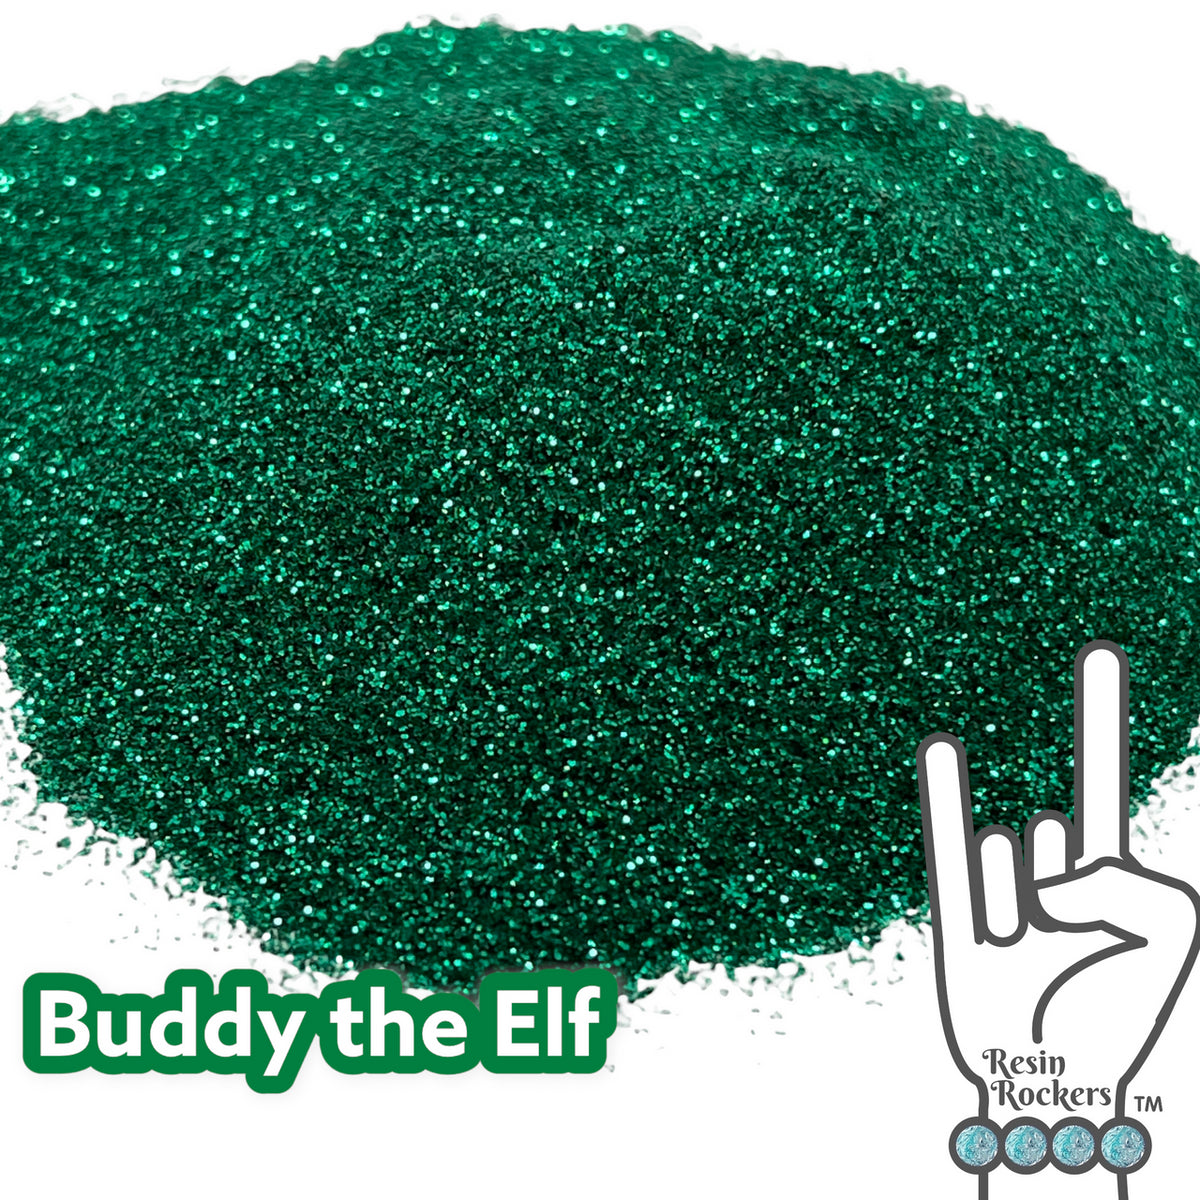 Buddy the Elf Green Pixie for Poxy Micro Fine Glitter